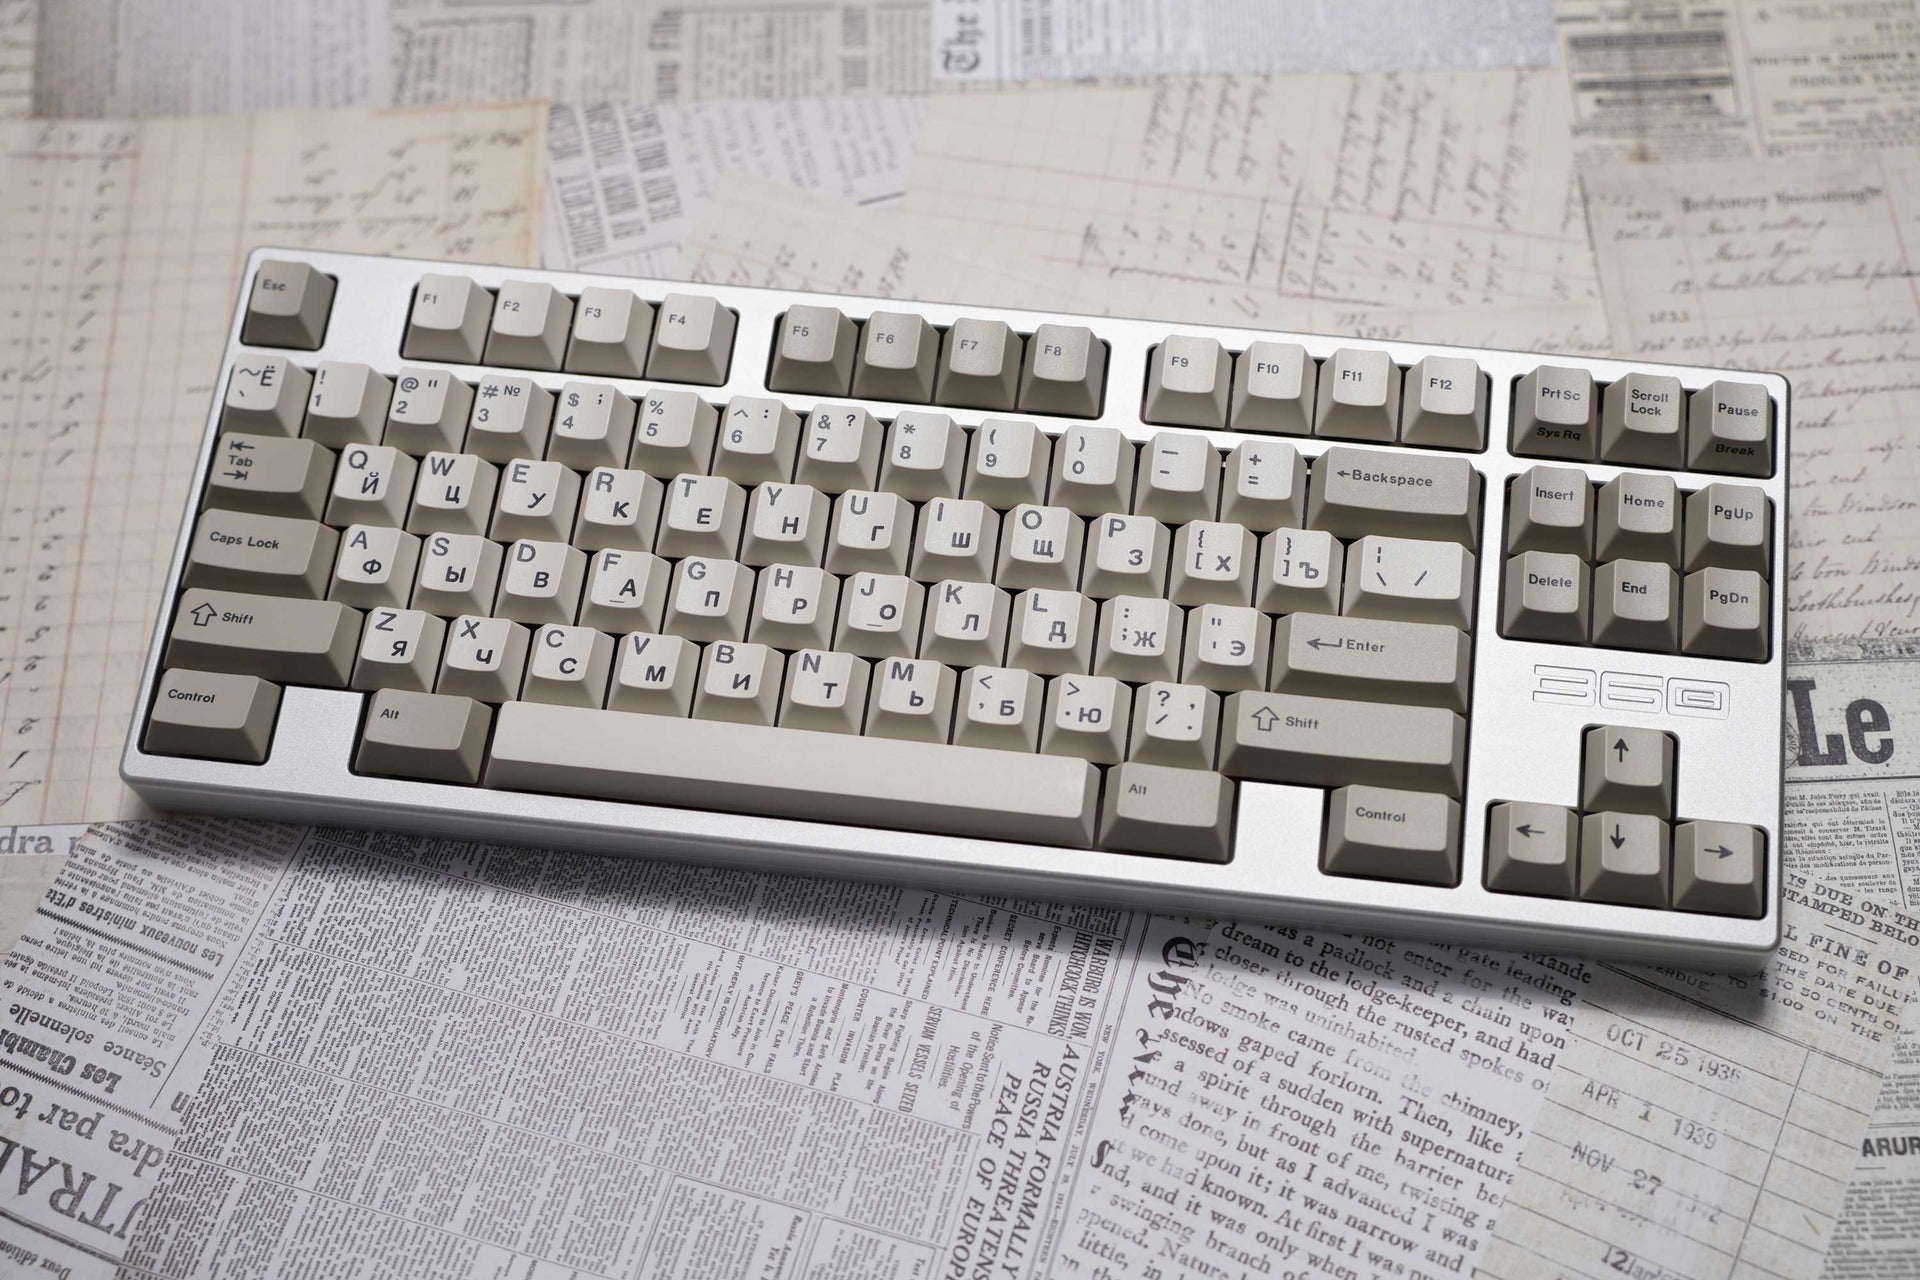 21KB Cyrillic Classic Retro Beige Keycap Set